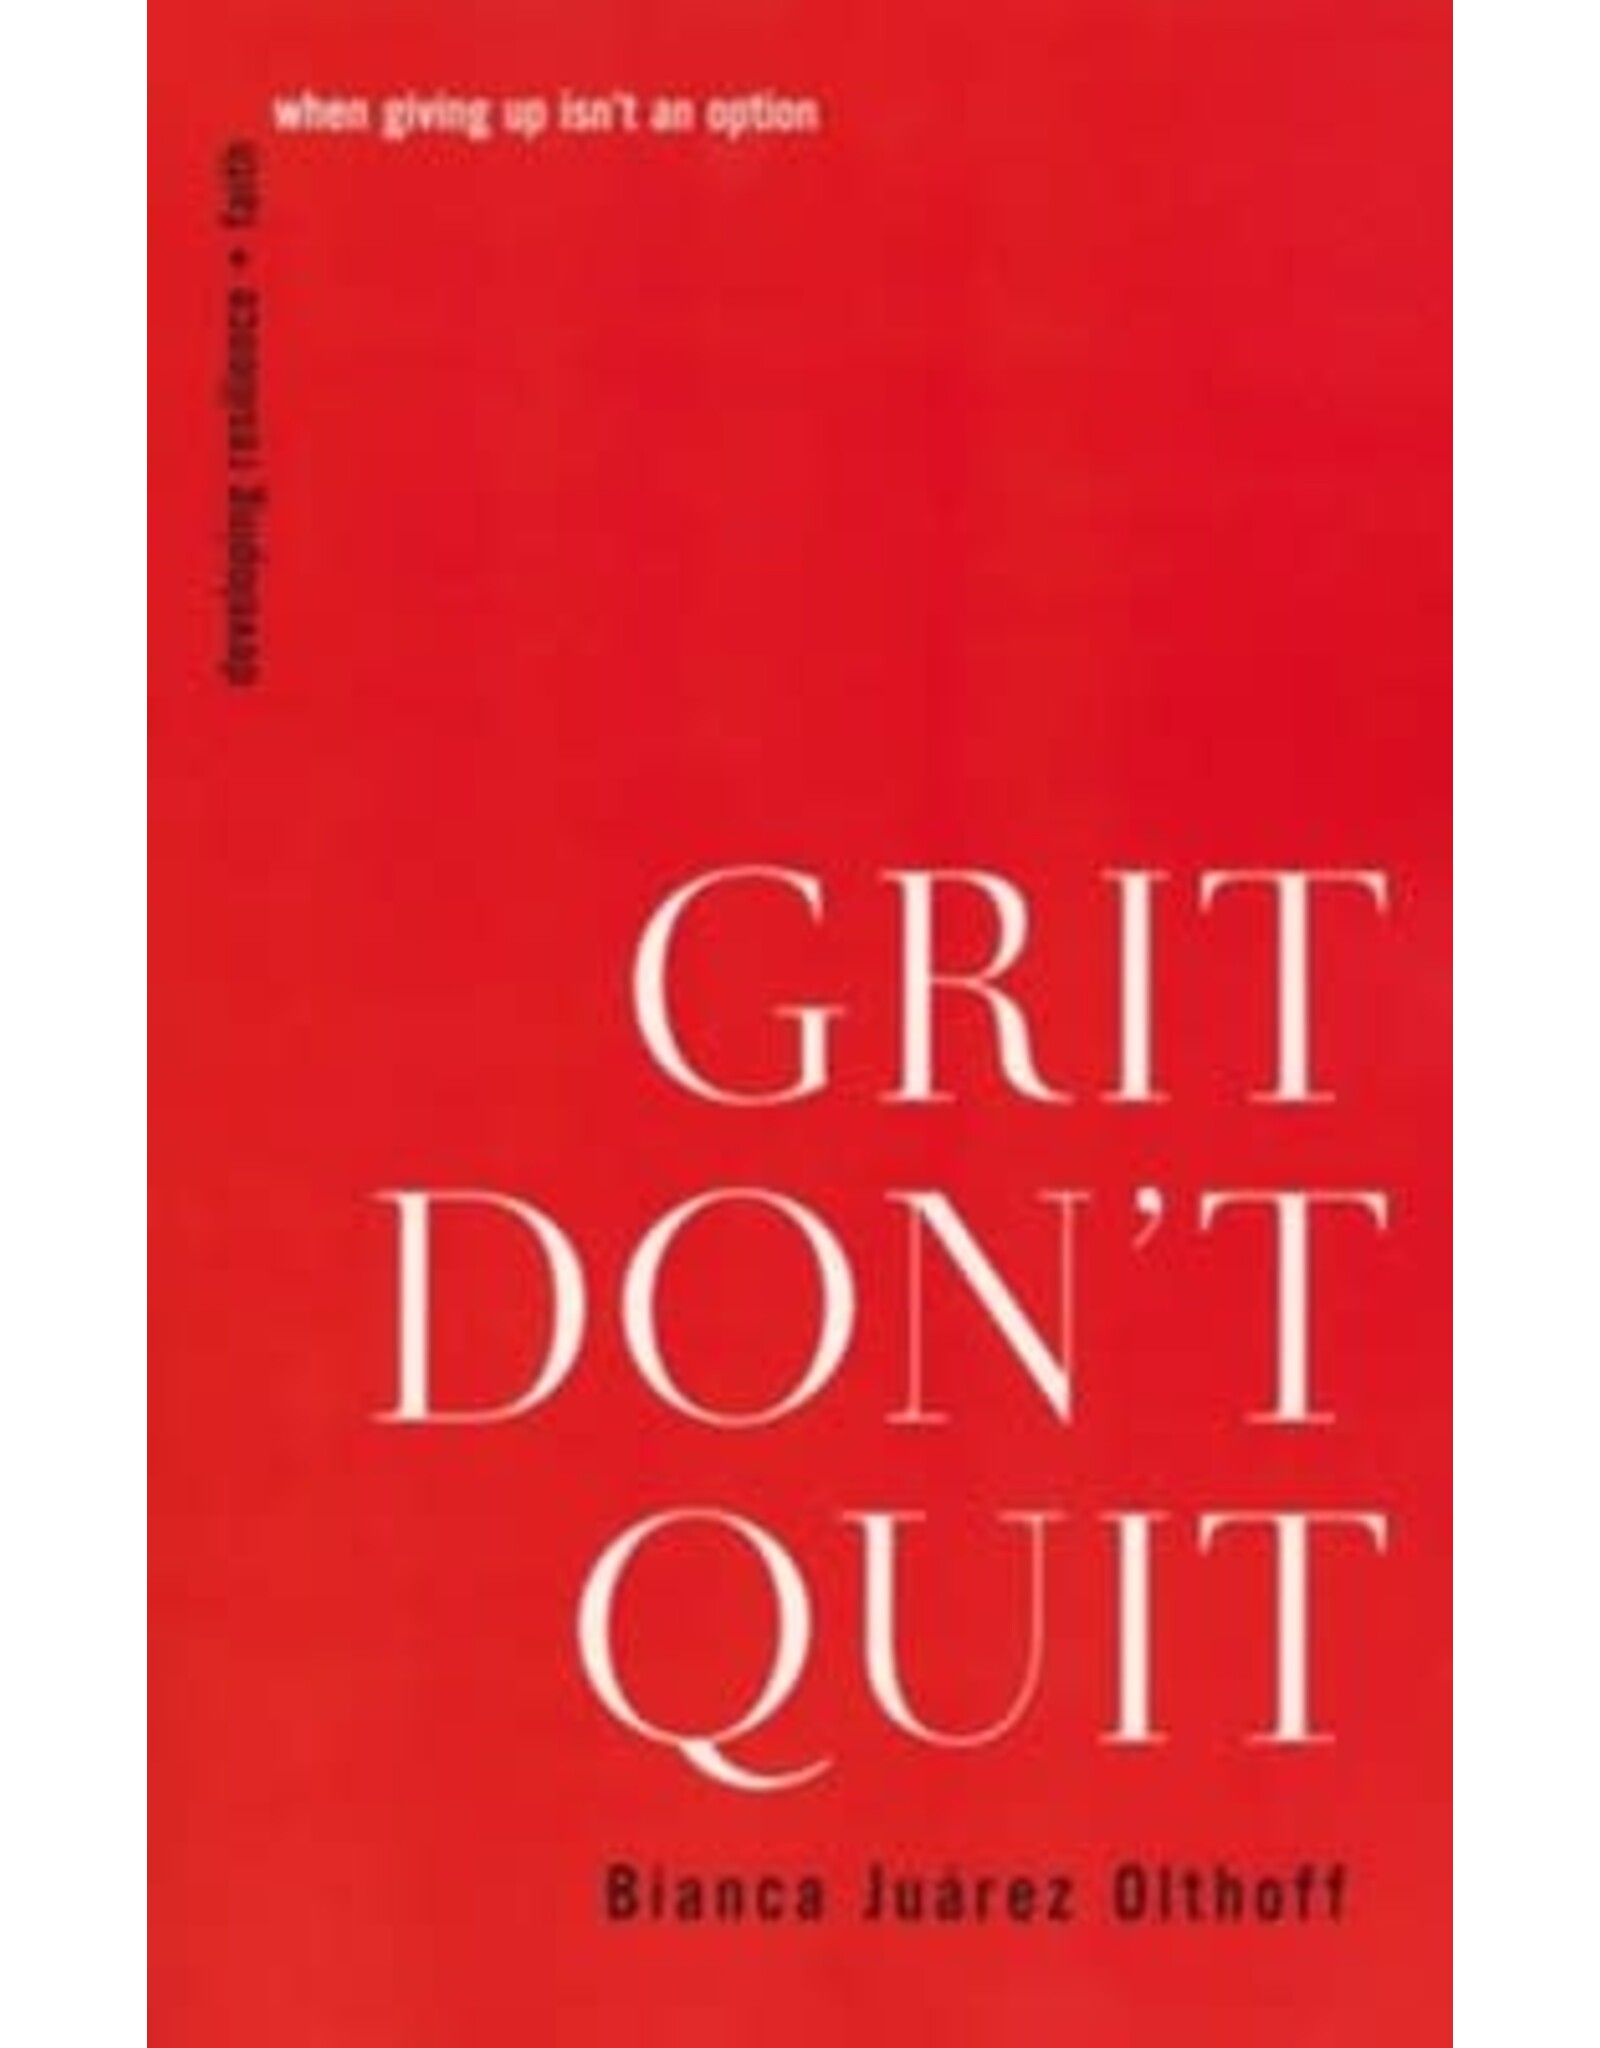 Grit Don’t Quit by Bianca Olthoff